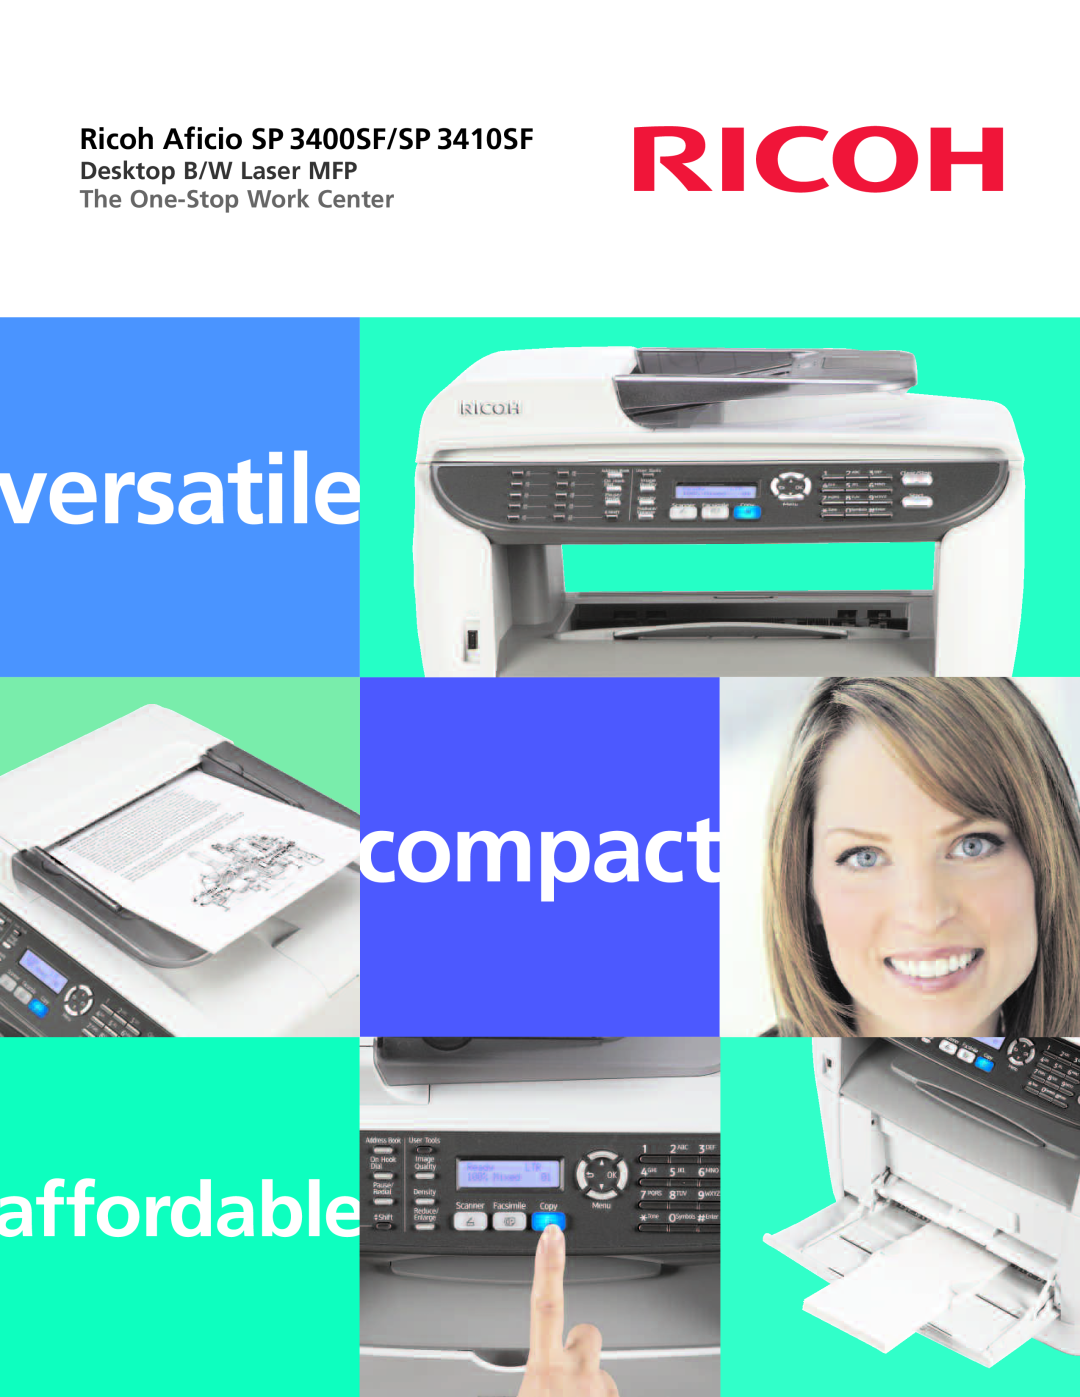 Ricoh manual versatile compact, affordable, Ricoh Aficio SP 3400SF/SP 3410SF, Desktop B/W Laser MFP 